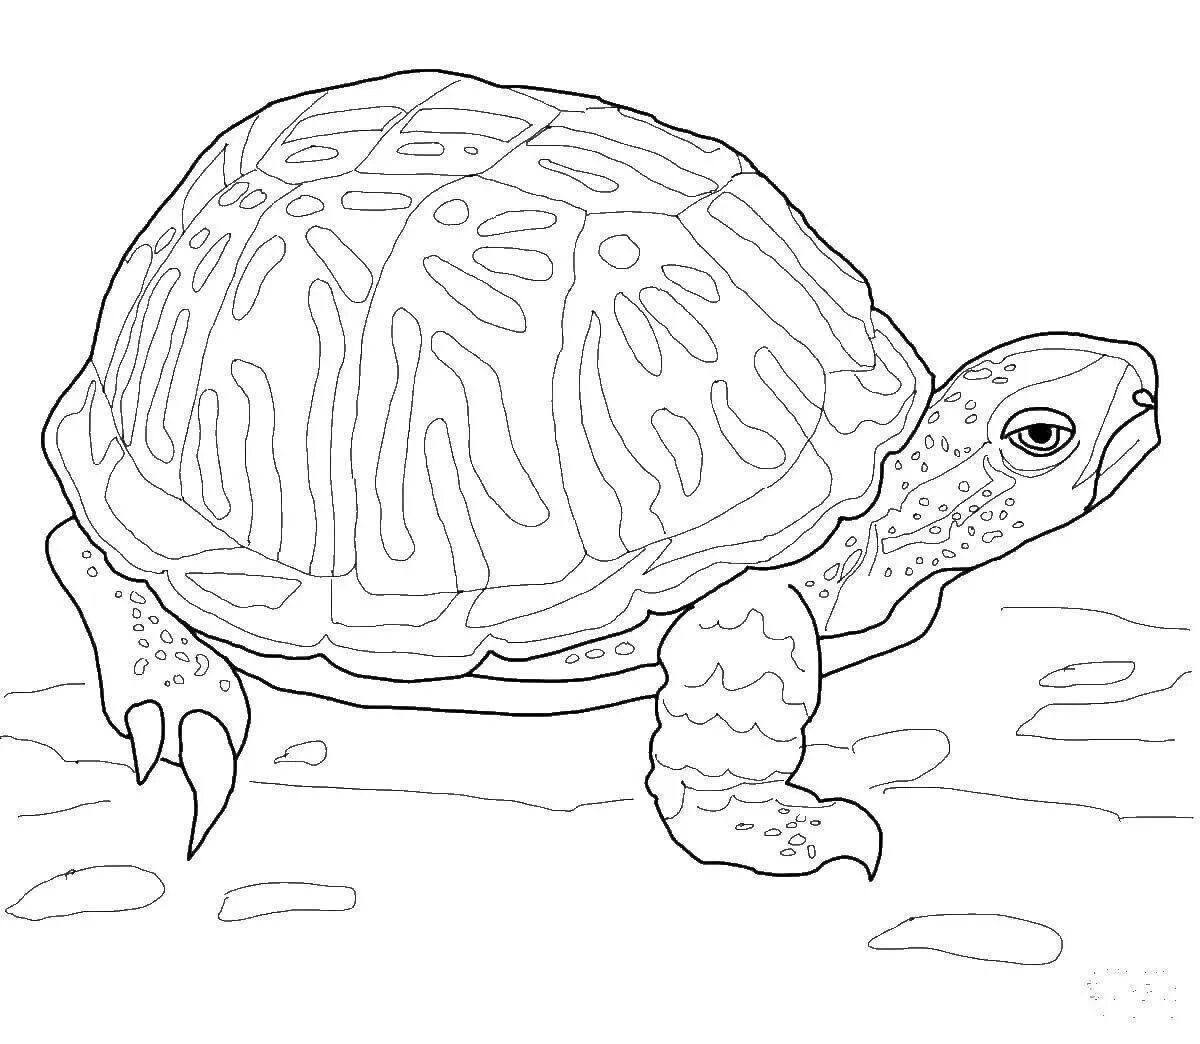 Красноухая черепаха раскраска. Болотная черепаха раскраска. Raskrasksa cherepaxa. Черепаха раскраска для детей.